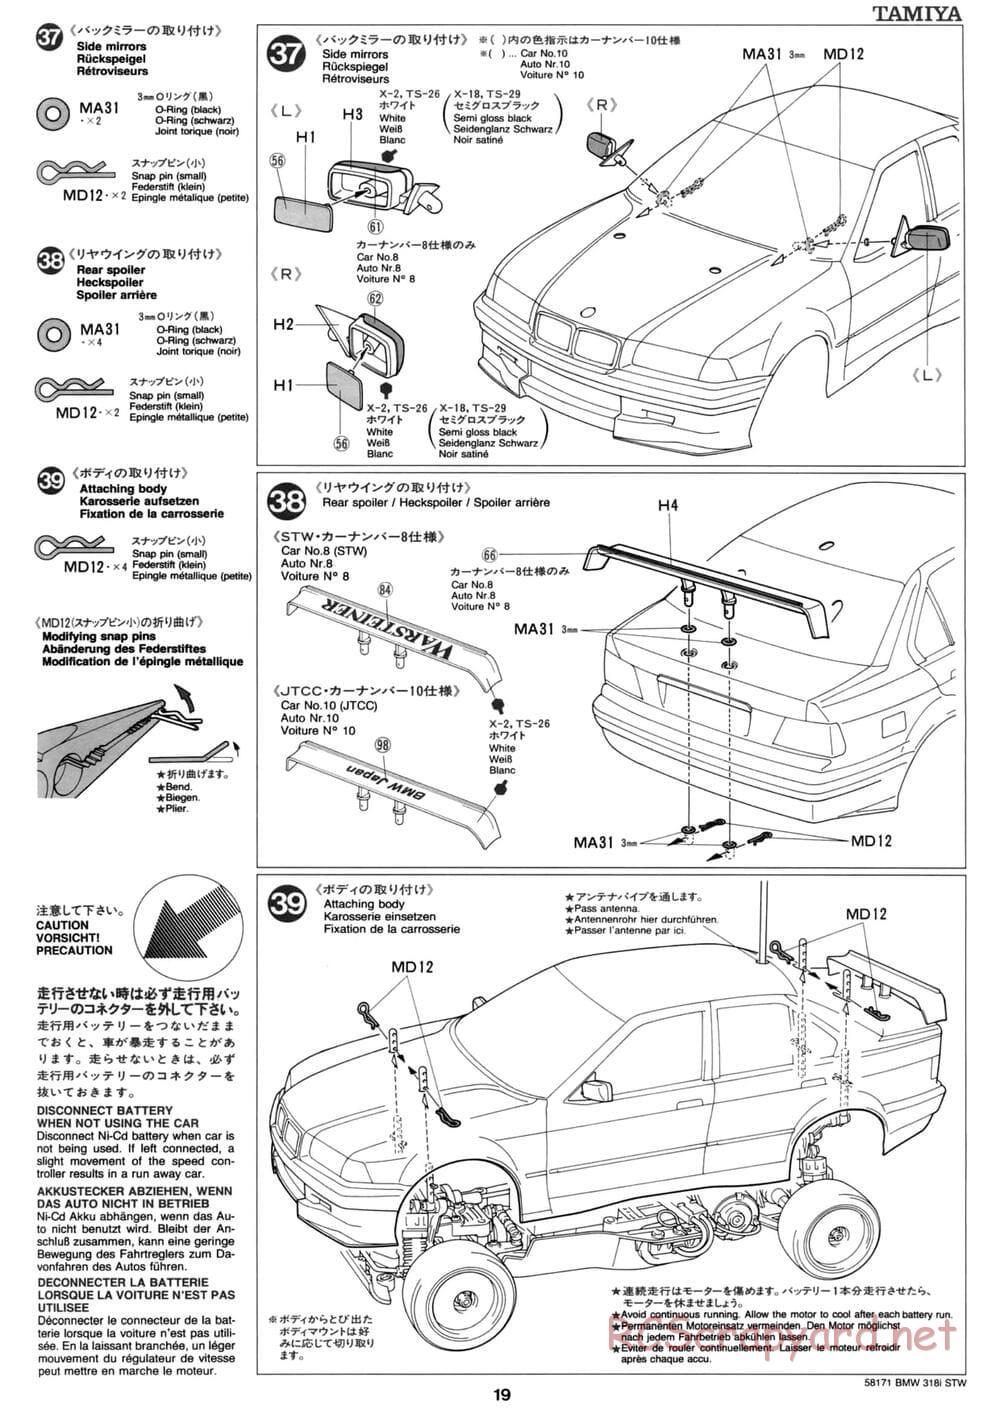 Tamiya - BMW 318i STW - TA-02 Chassis - Manual - Page 19